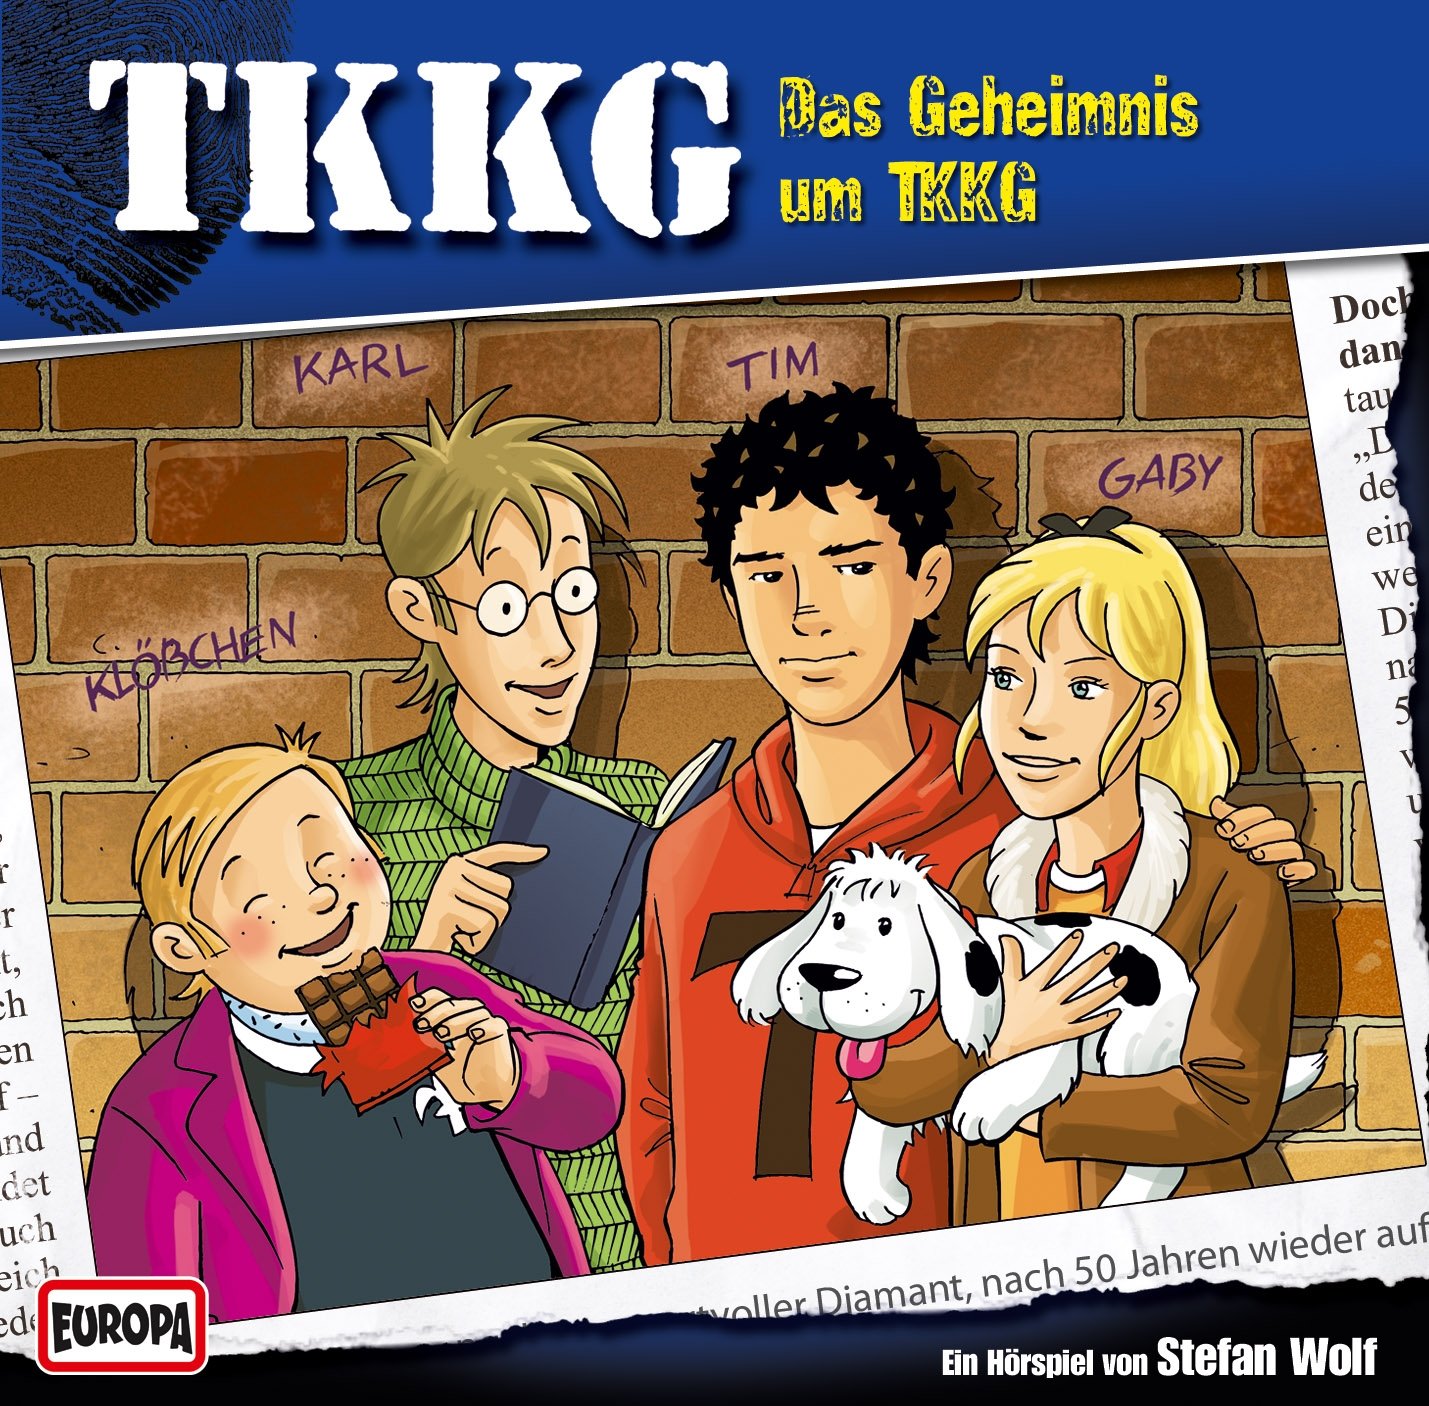 TKKG Hörspiel-Folge 209: Das Geheimnis um TKKG (Neuaufnahme)